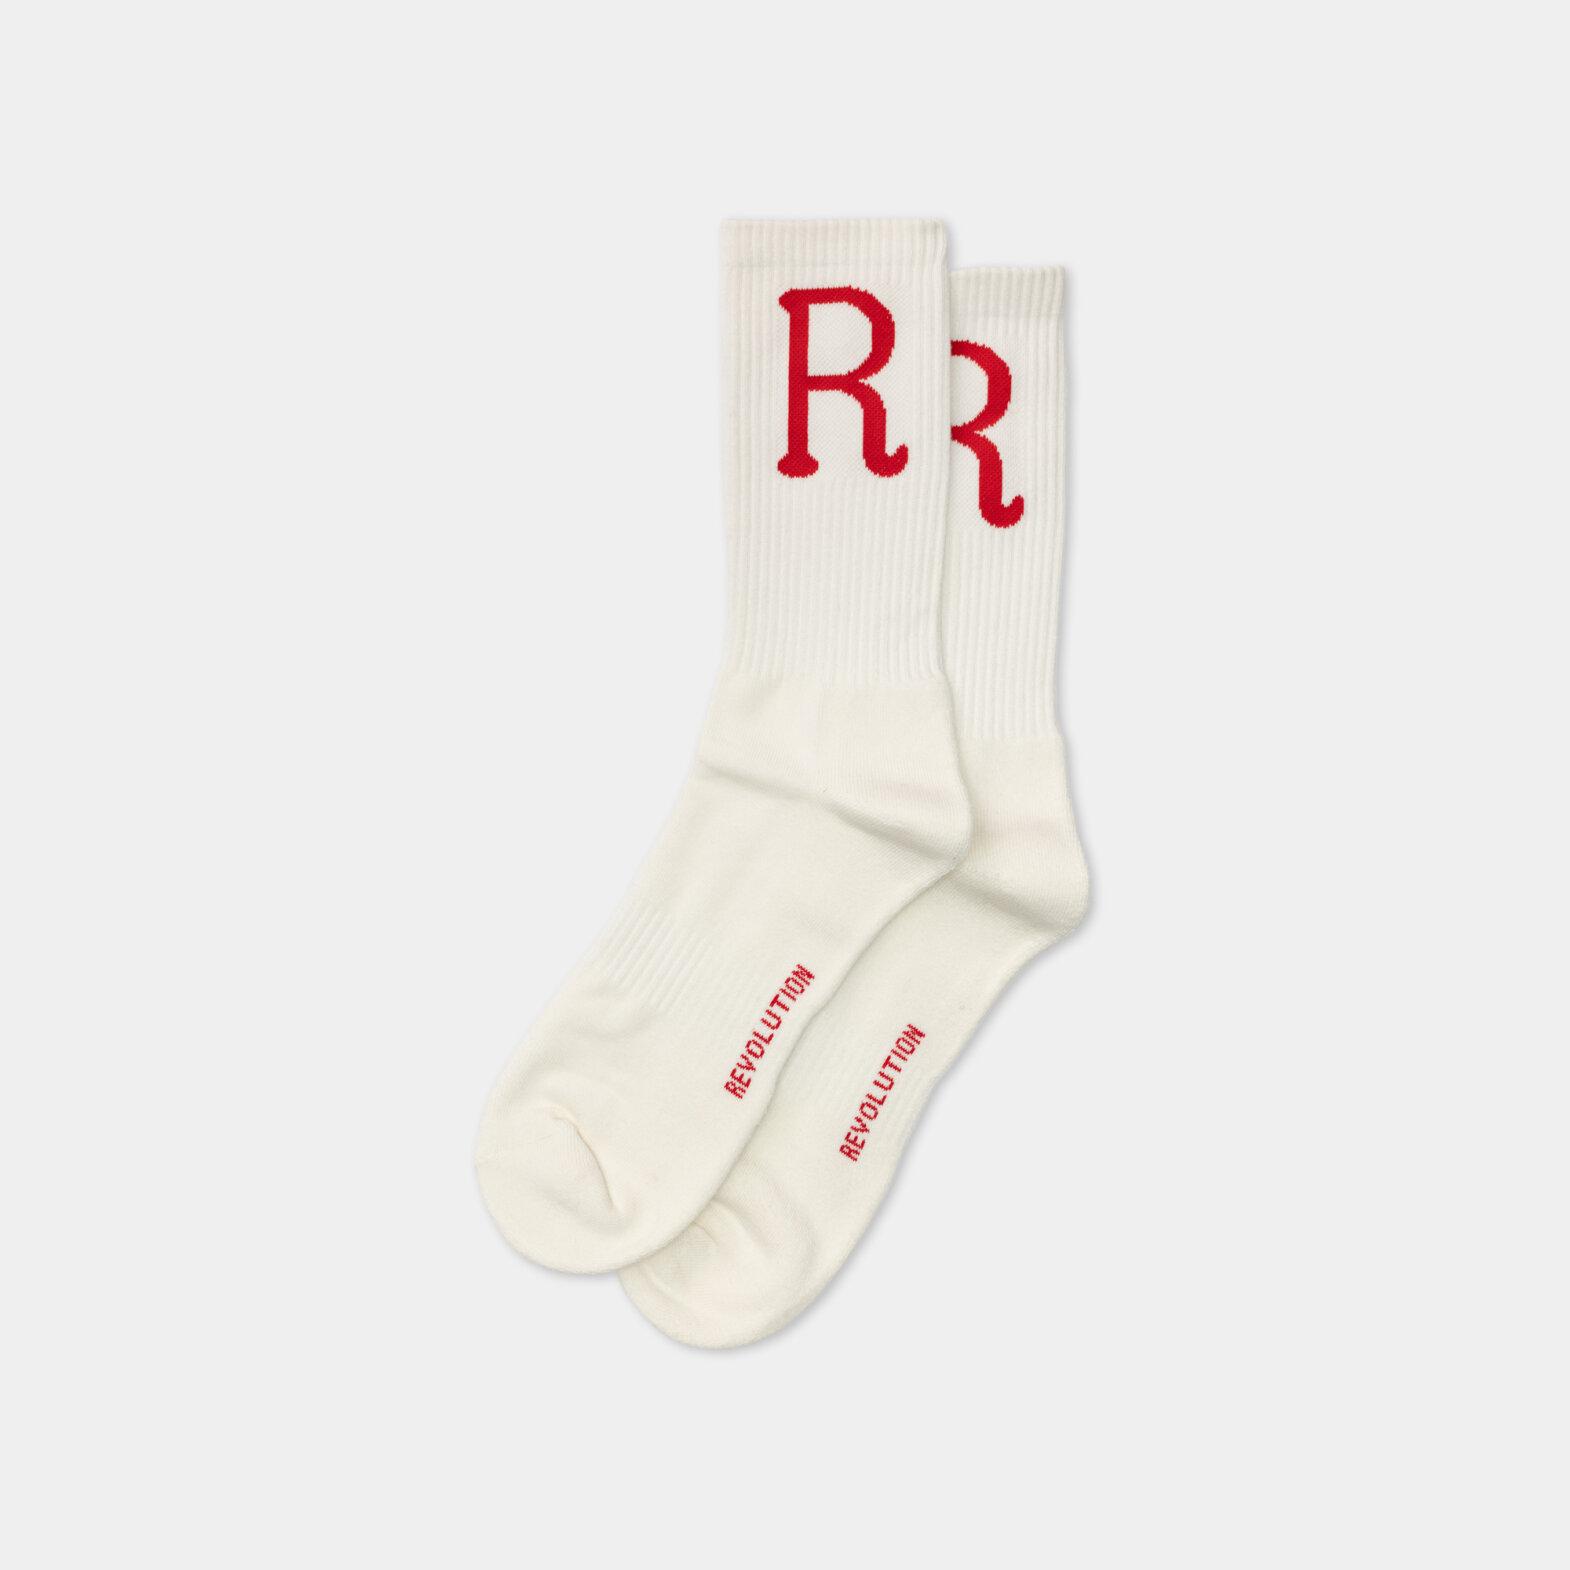 Revolution brand sock 1570x1570c 1 